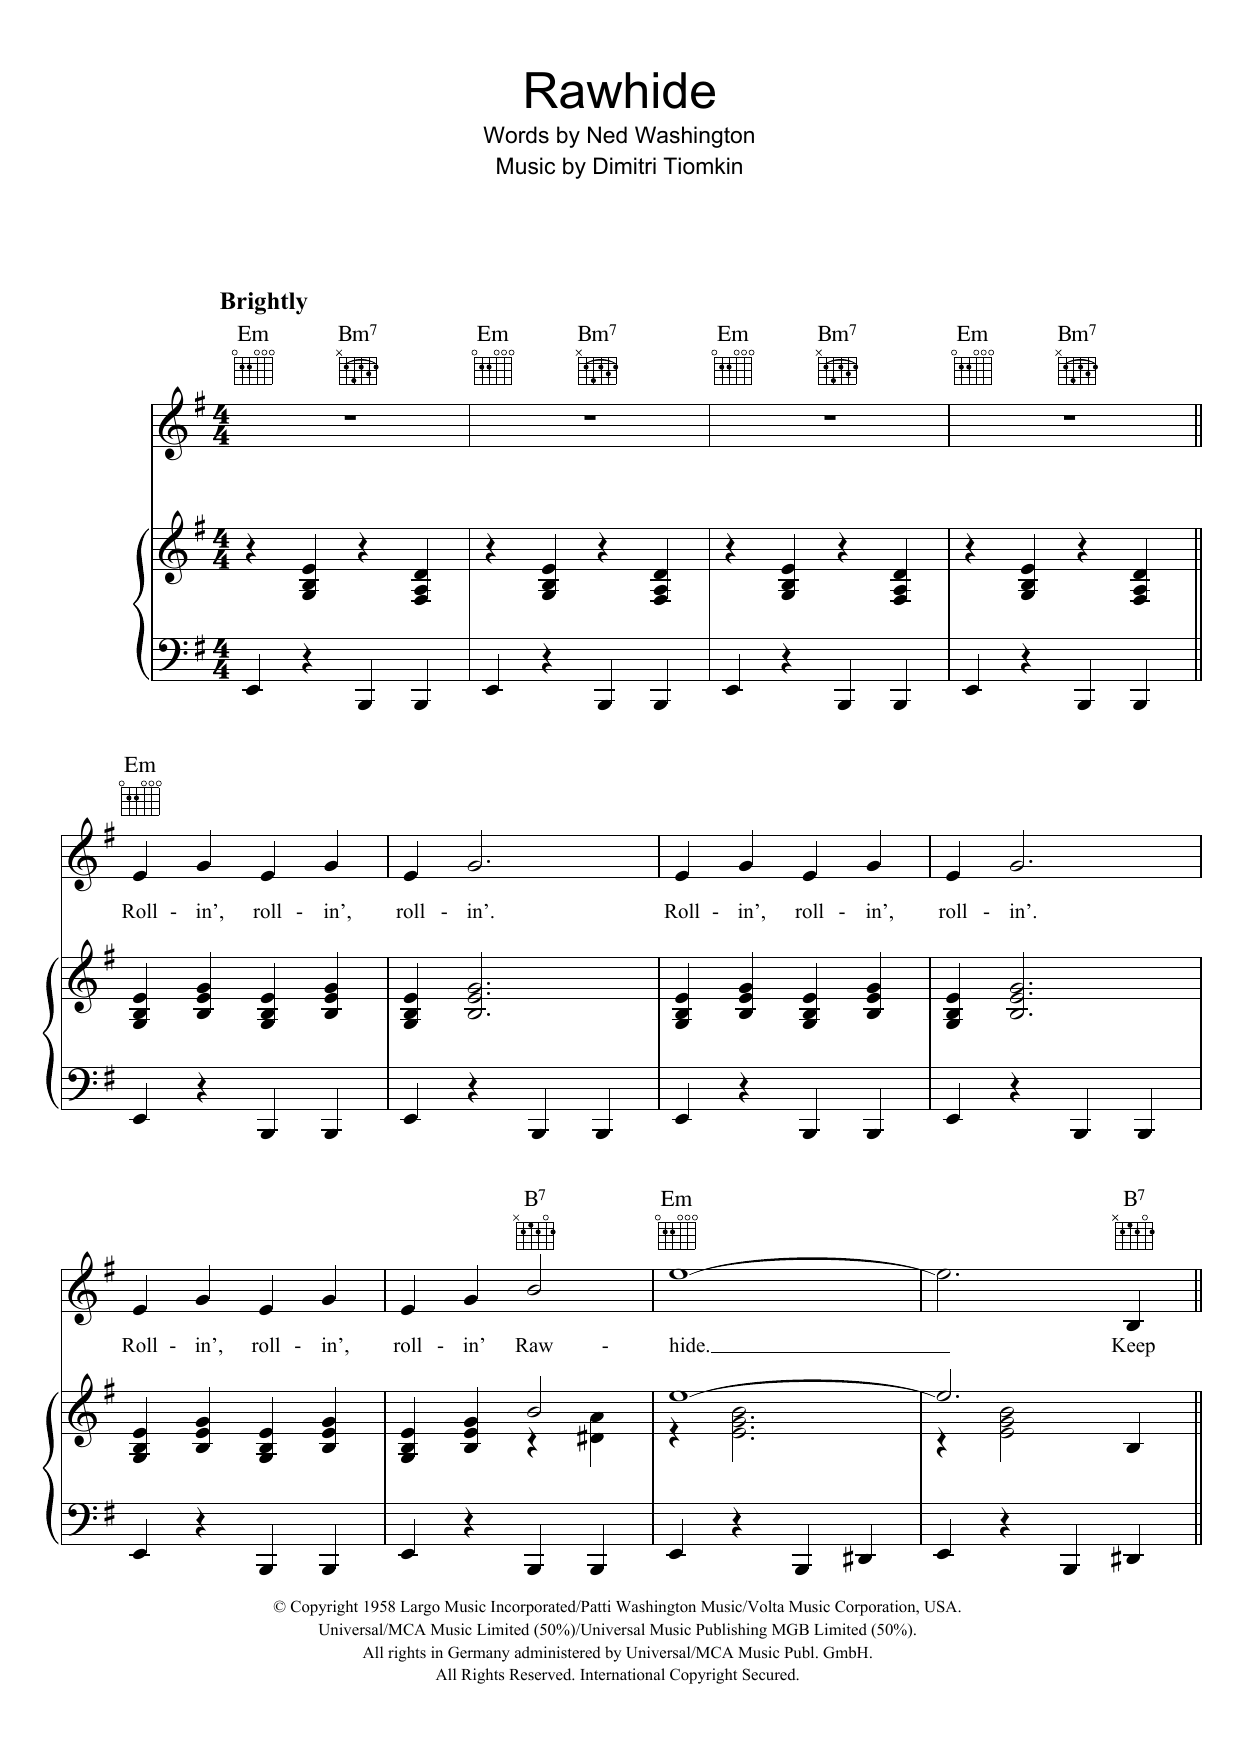 Dimitri Tiomkin Rawhide Sheet Music Notes & Chords for Piano, Vocal & Guitar - Download or Print PDF